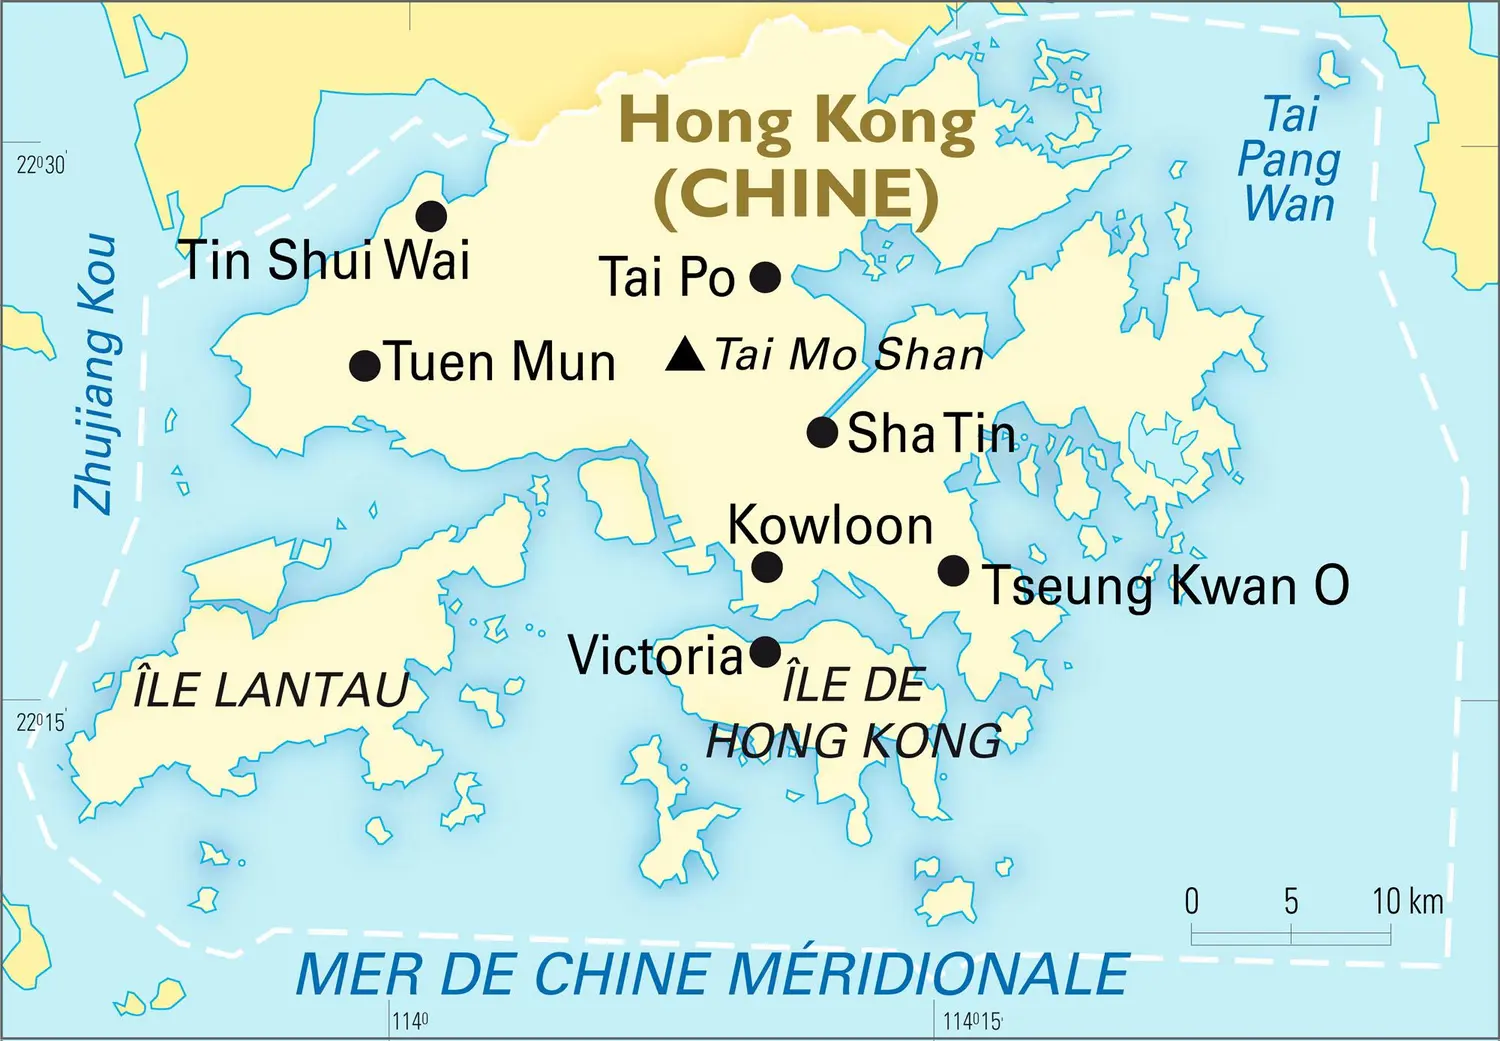 Hong Kong [Chine] : carte générale